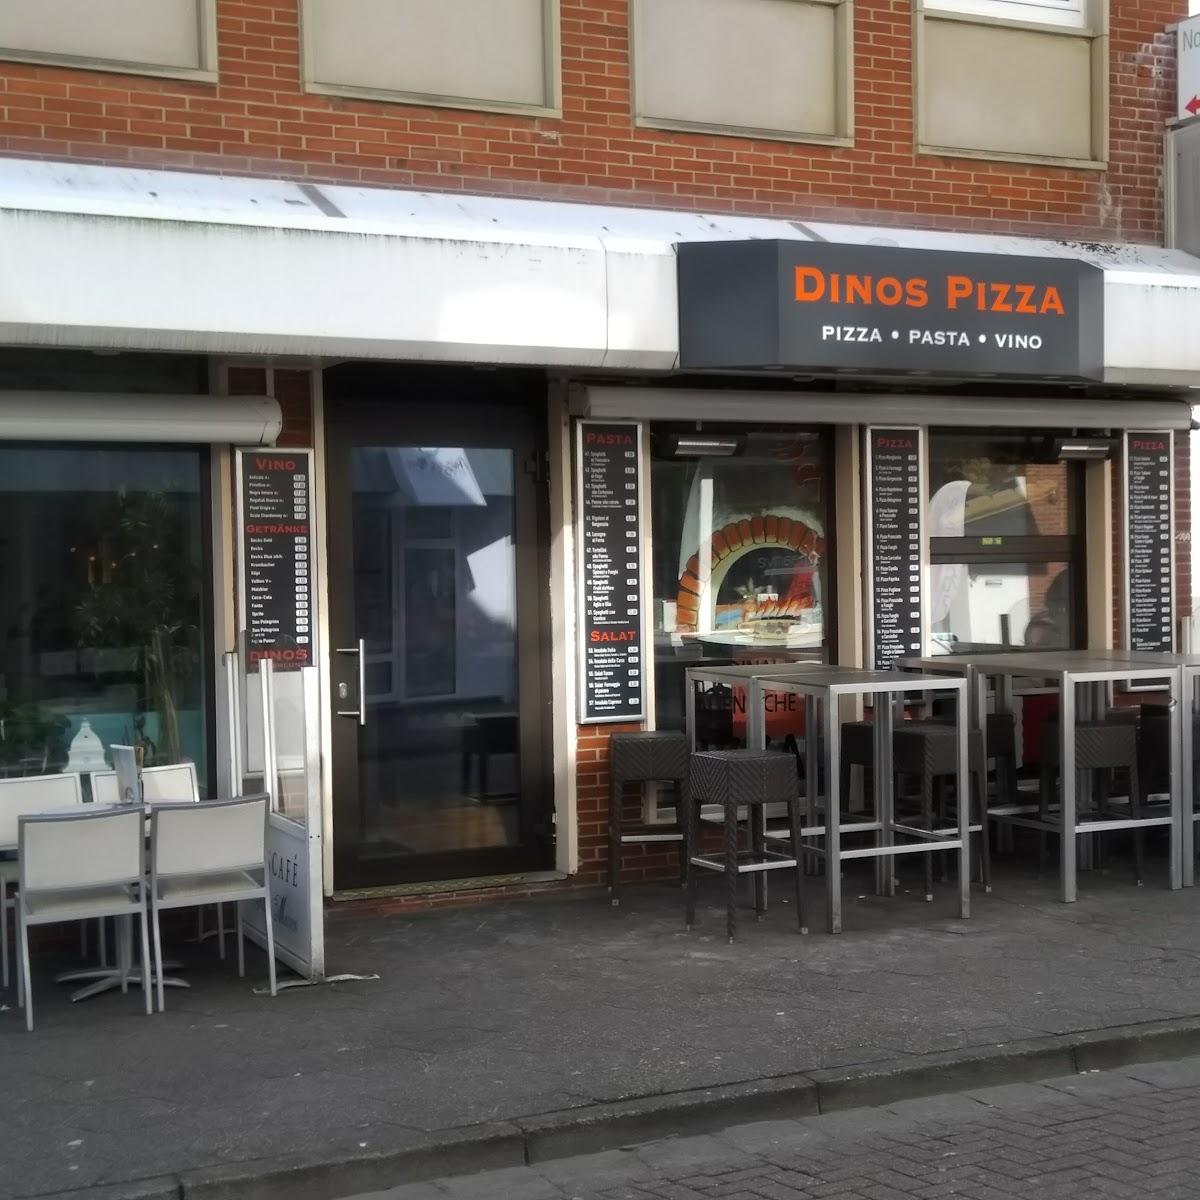 Restaurant "Dinos Pizza" in Norderney